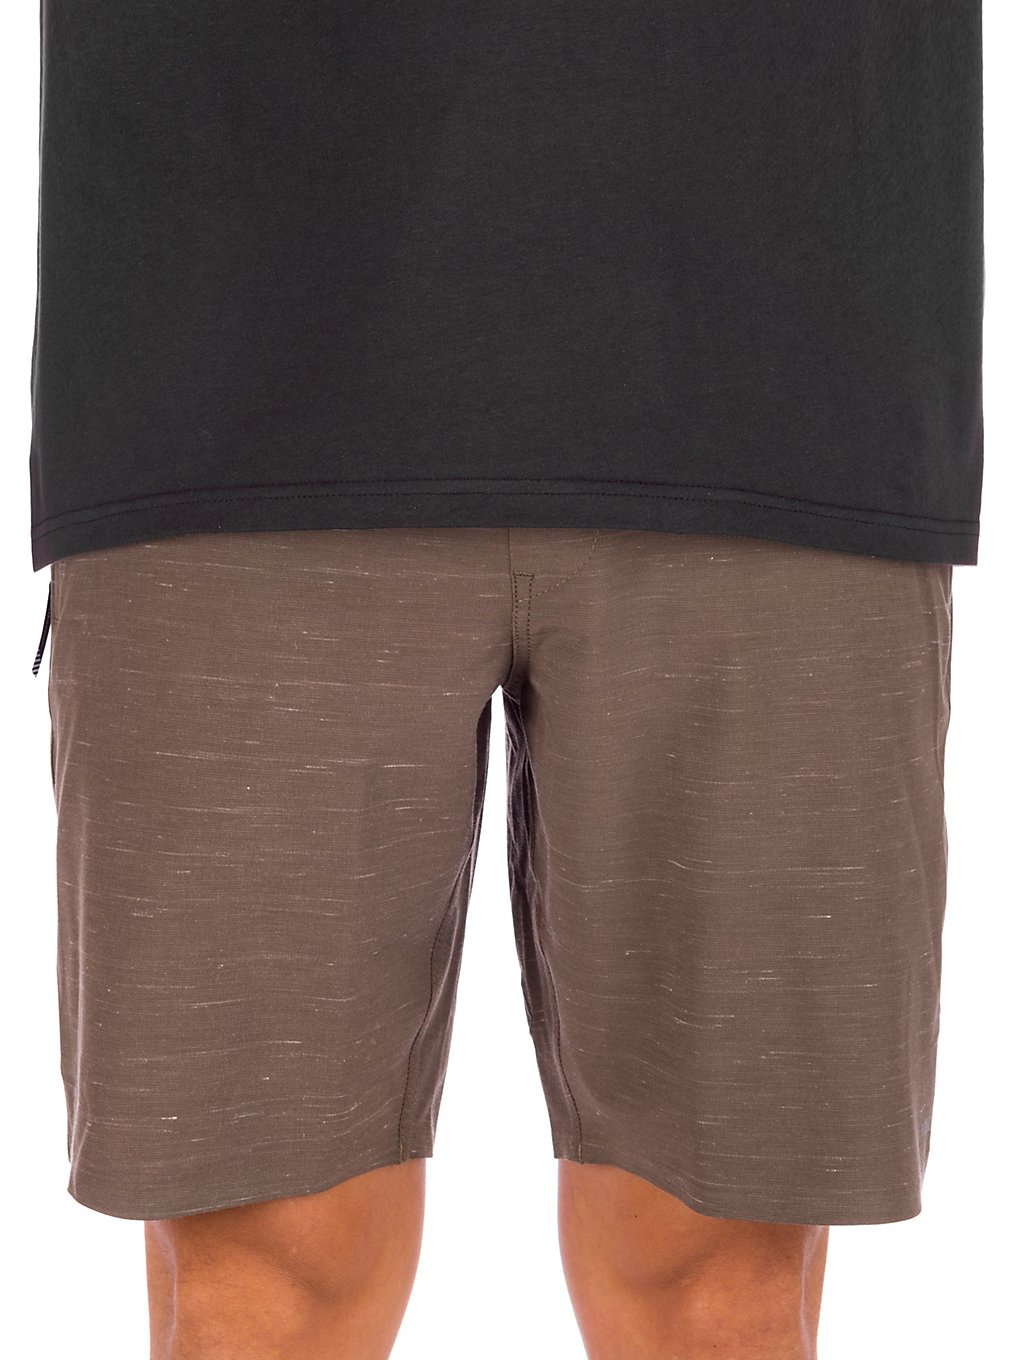 Volcom Packasack Lite 19 Shorts marron